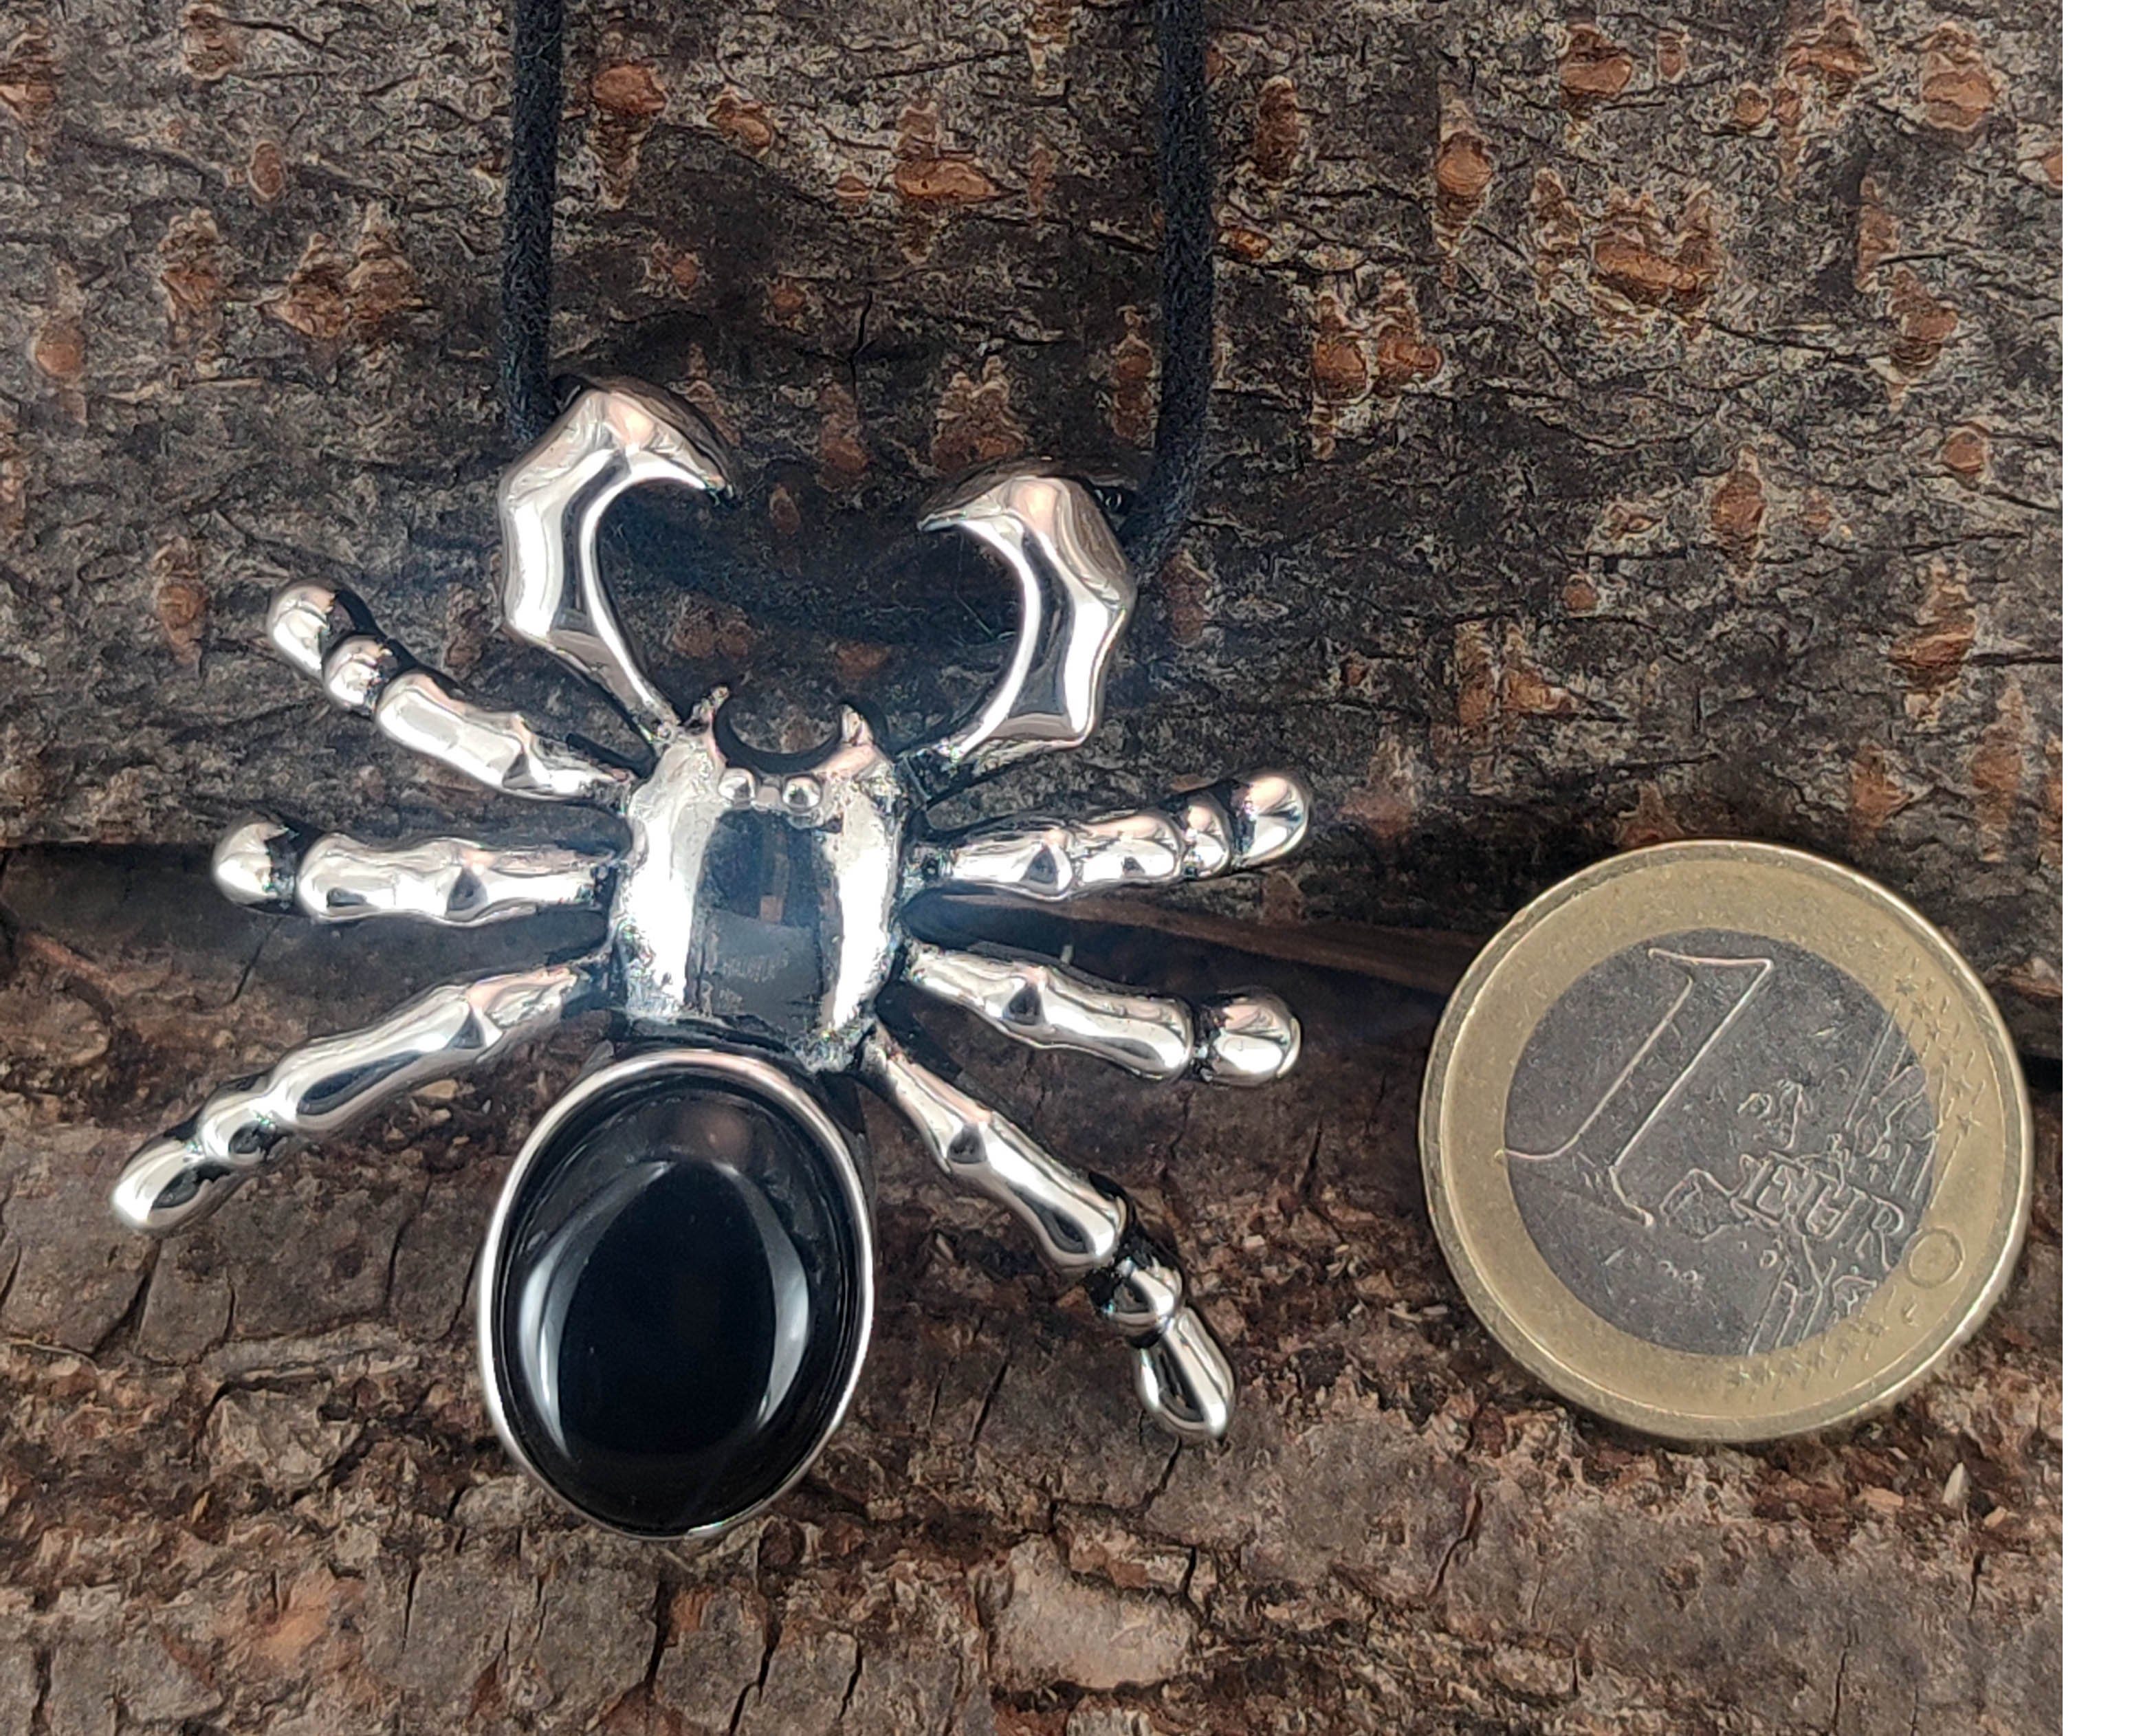 Spinne Spider aus of Kiss Anhänger Spinnen Leather Kettenanhänger massiver Edelstahl großer